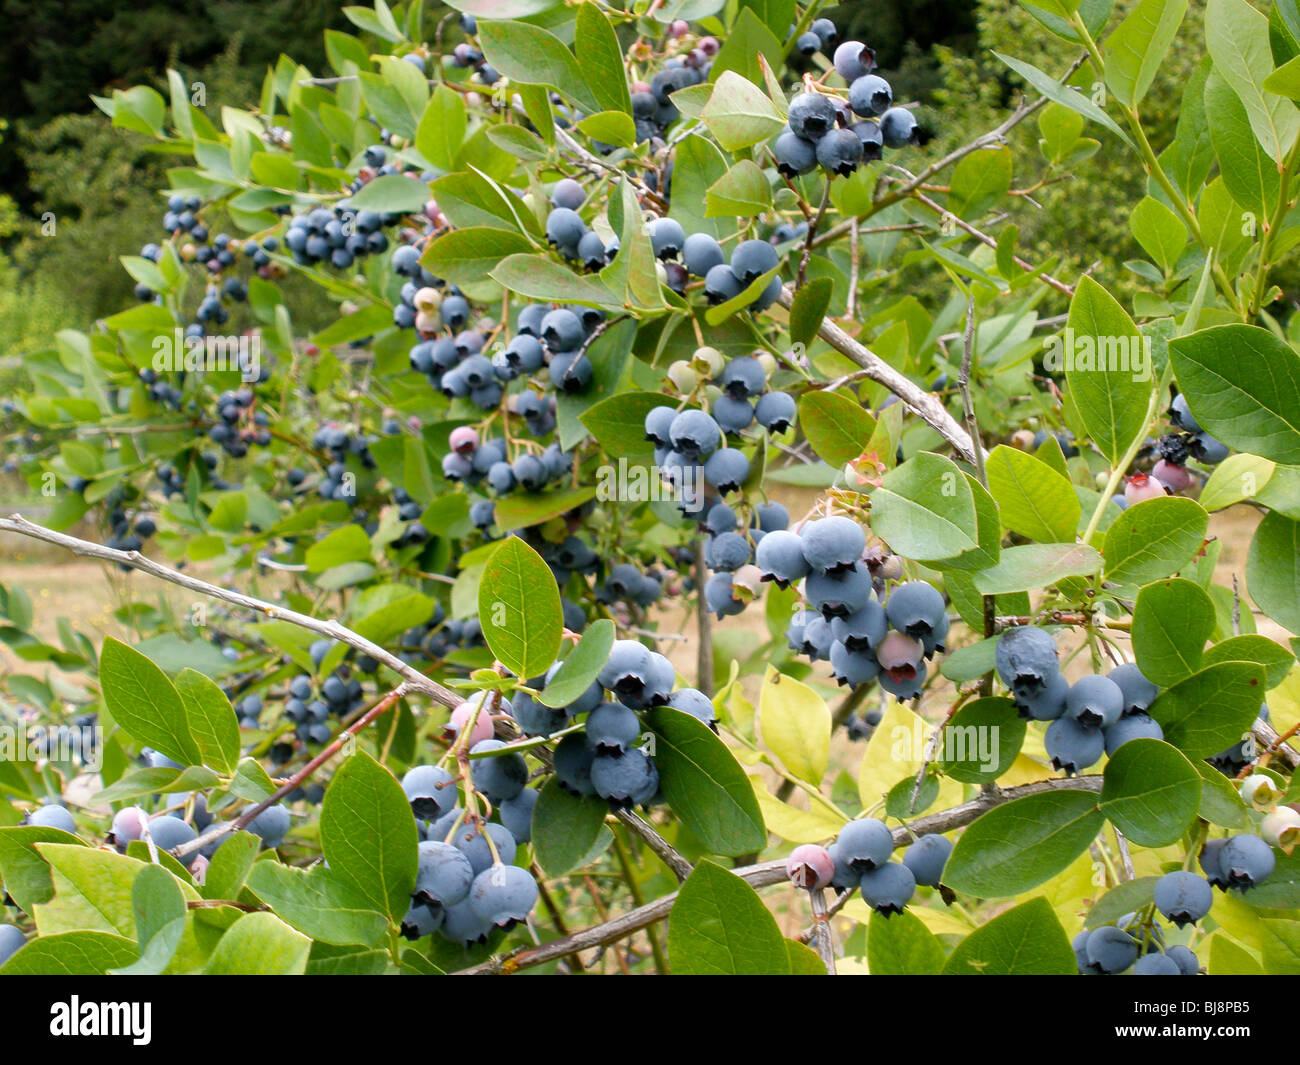 Washington blueberries on the bush. Stock Photo